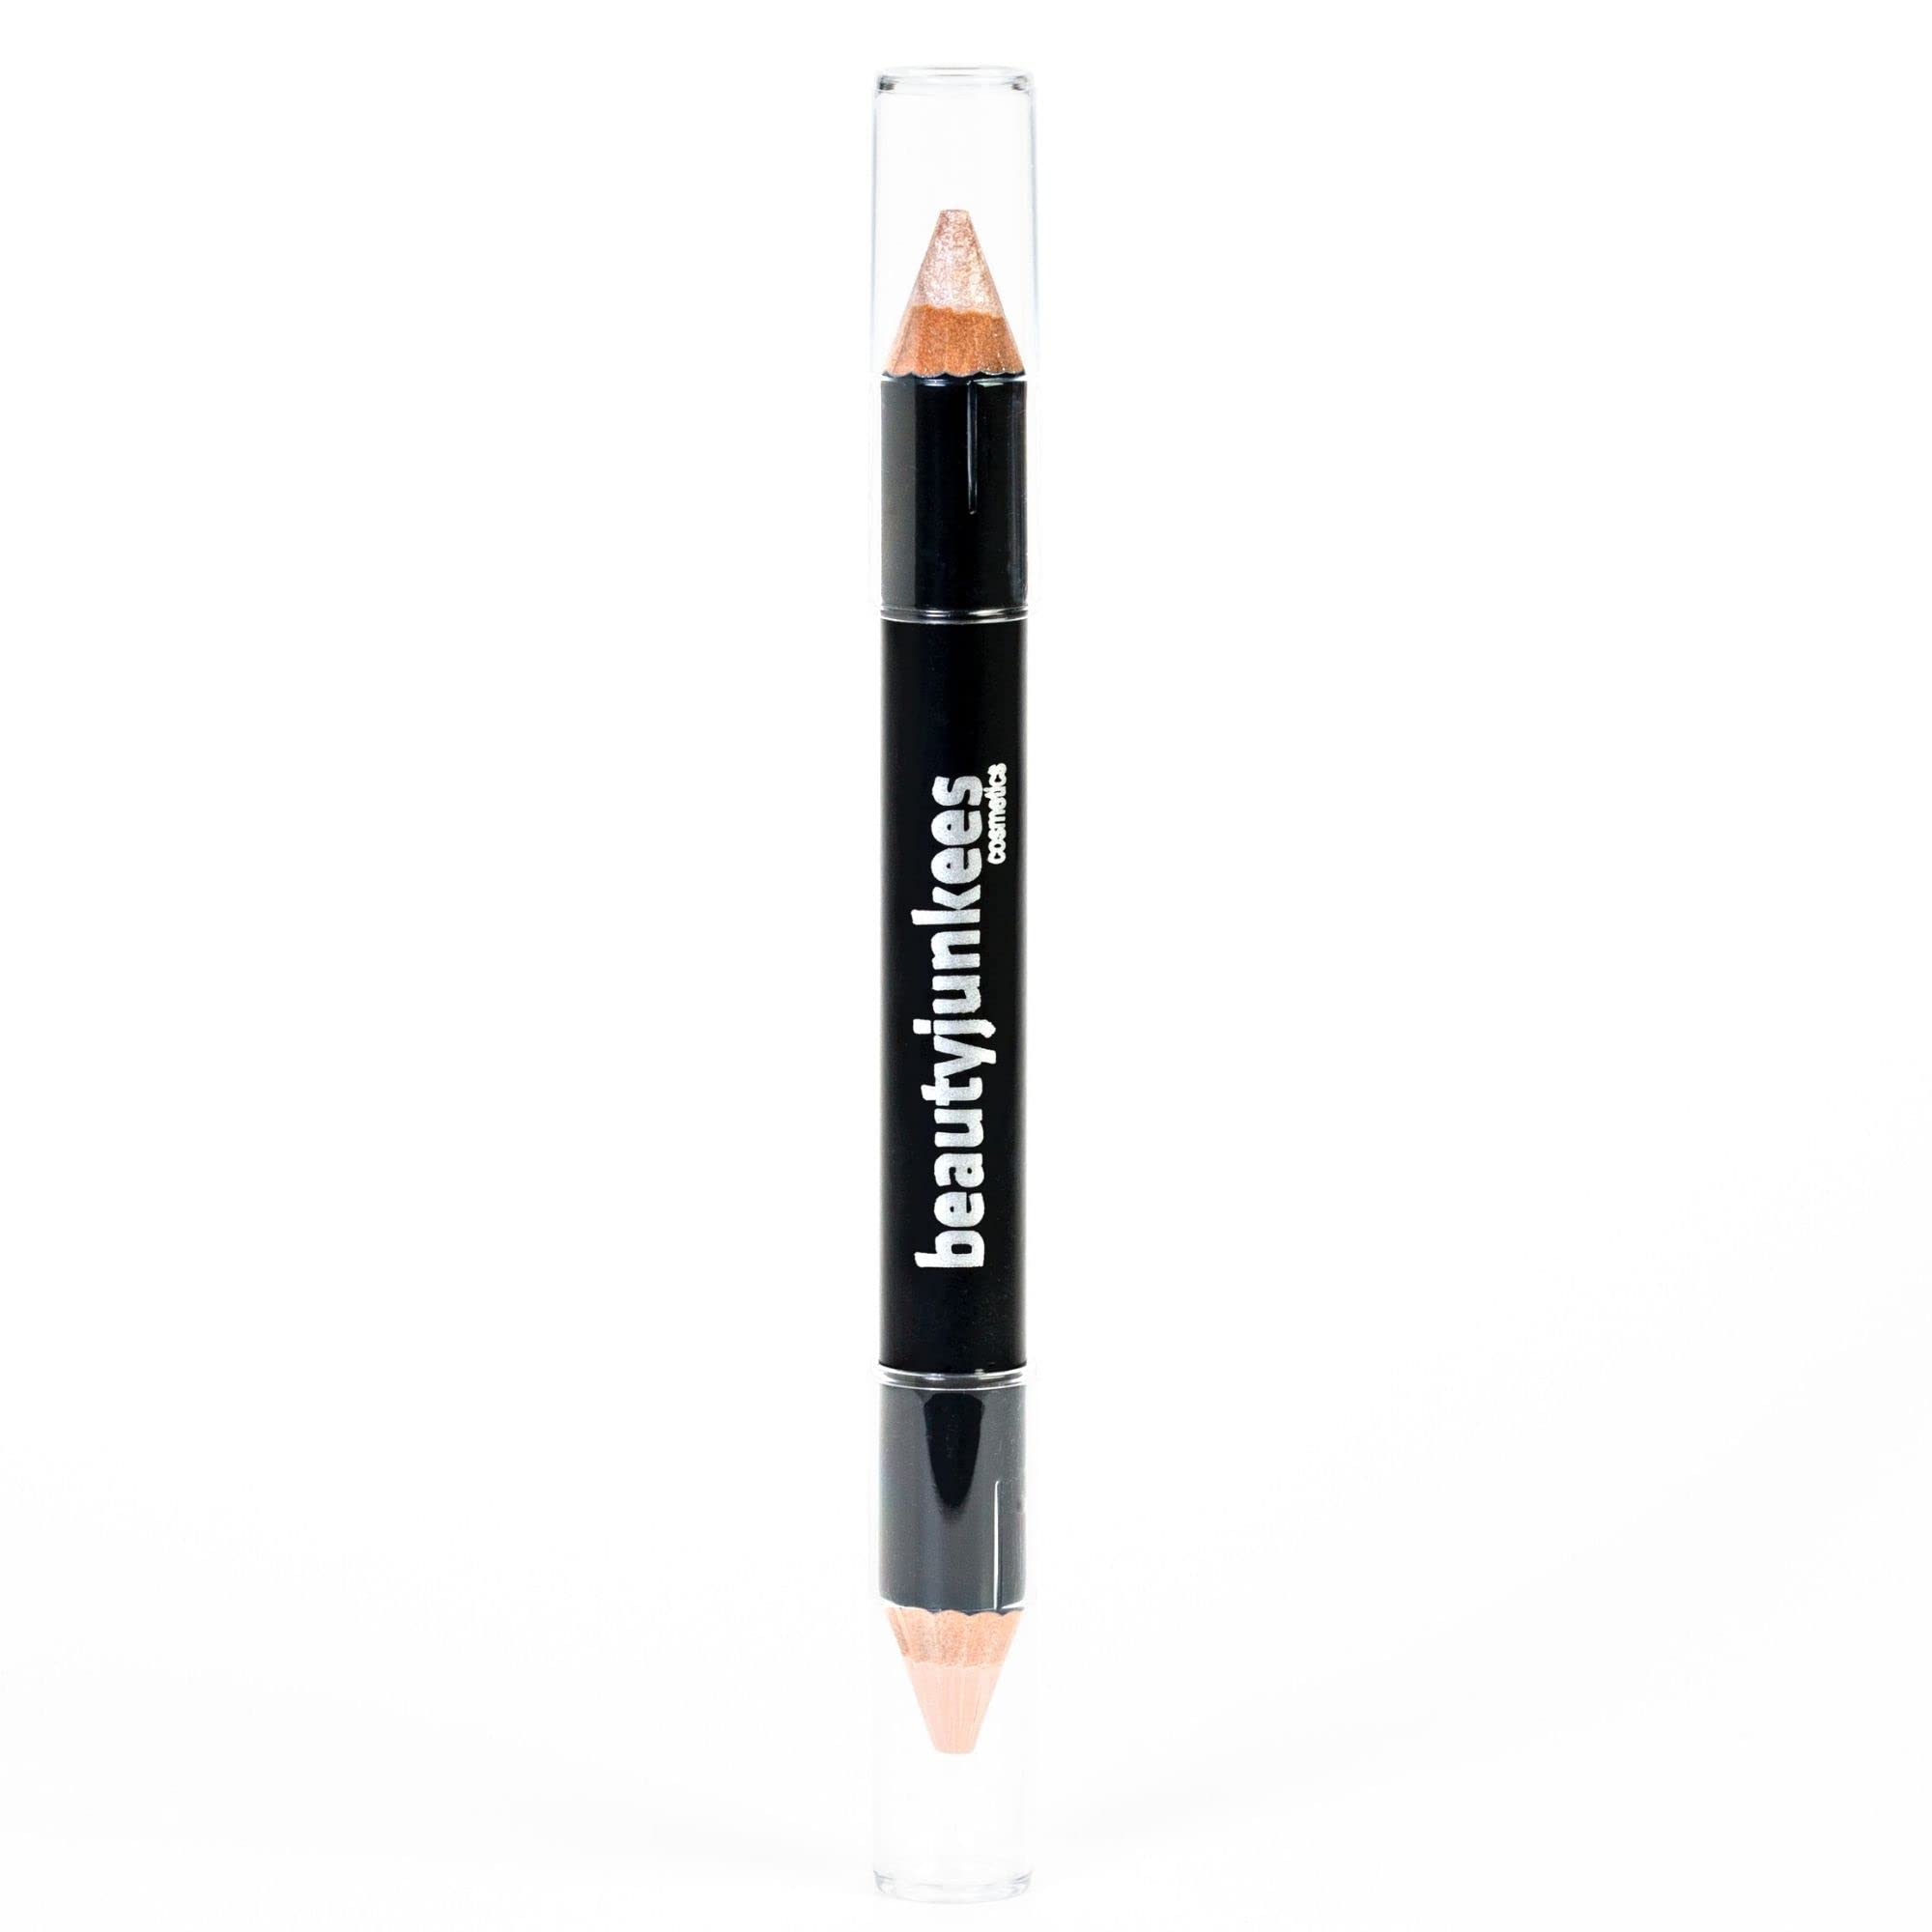 Eye Brightener Stick Highlighter - Eyebrow Concealer Duo Pencil Crayon Makeup, Creamy Matte Brow Shaper Definer, Shimmer for Highlighting Inner Corner, Gluten Paraben Cruelty Free, Cool Beige